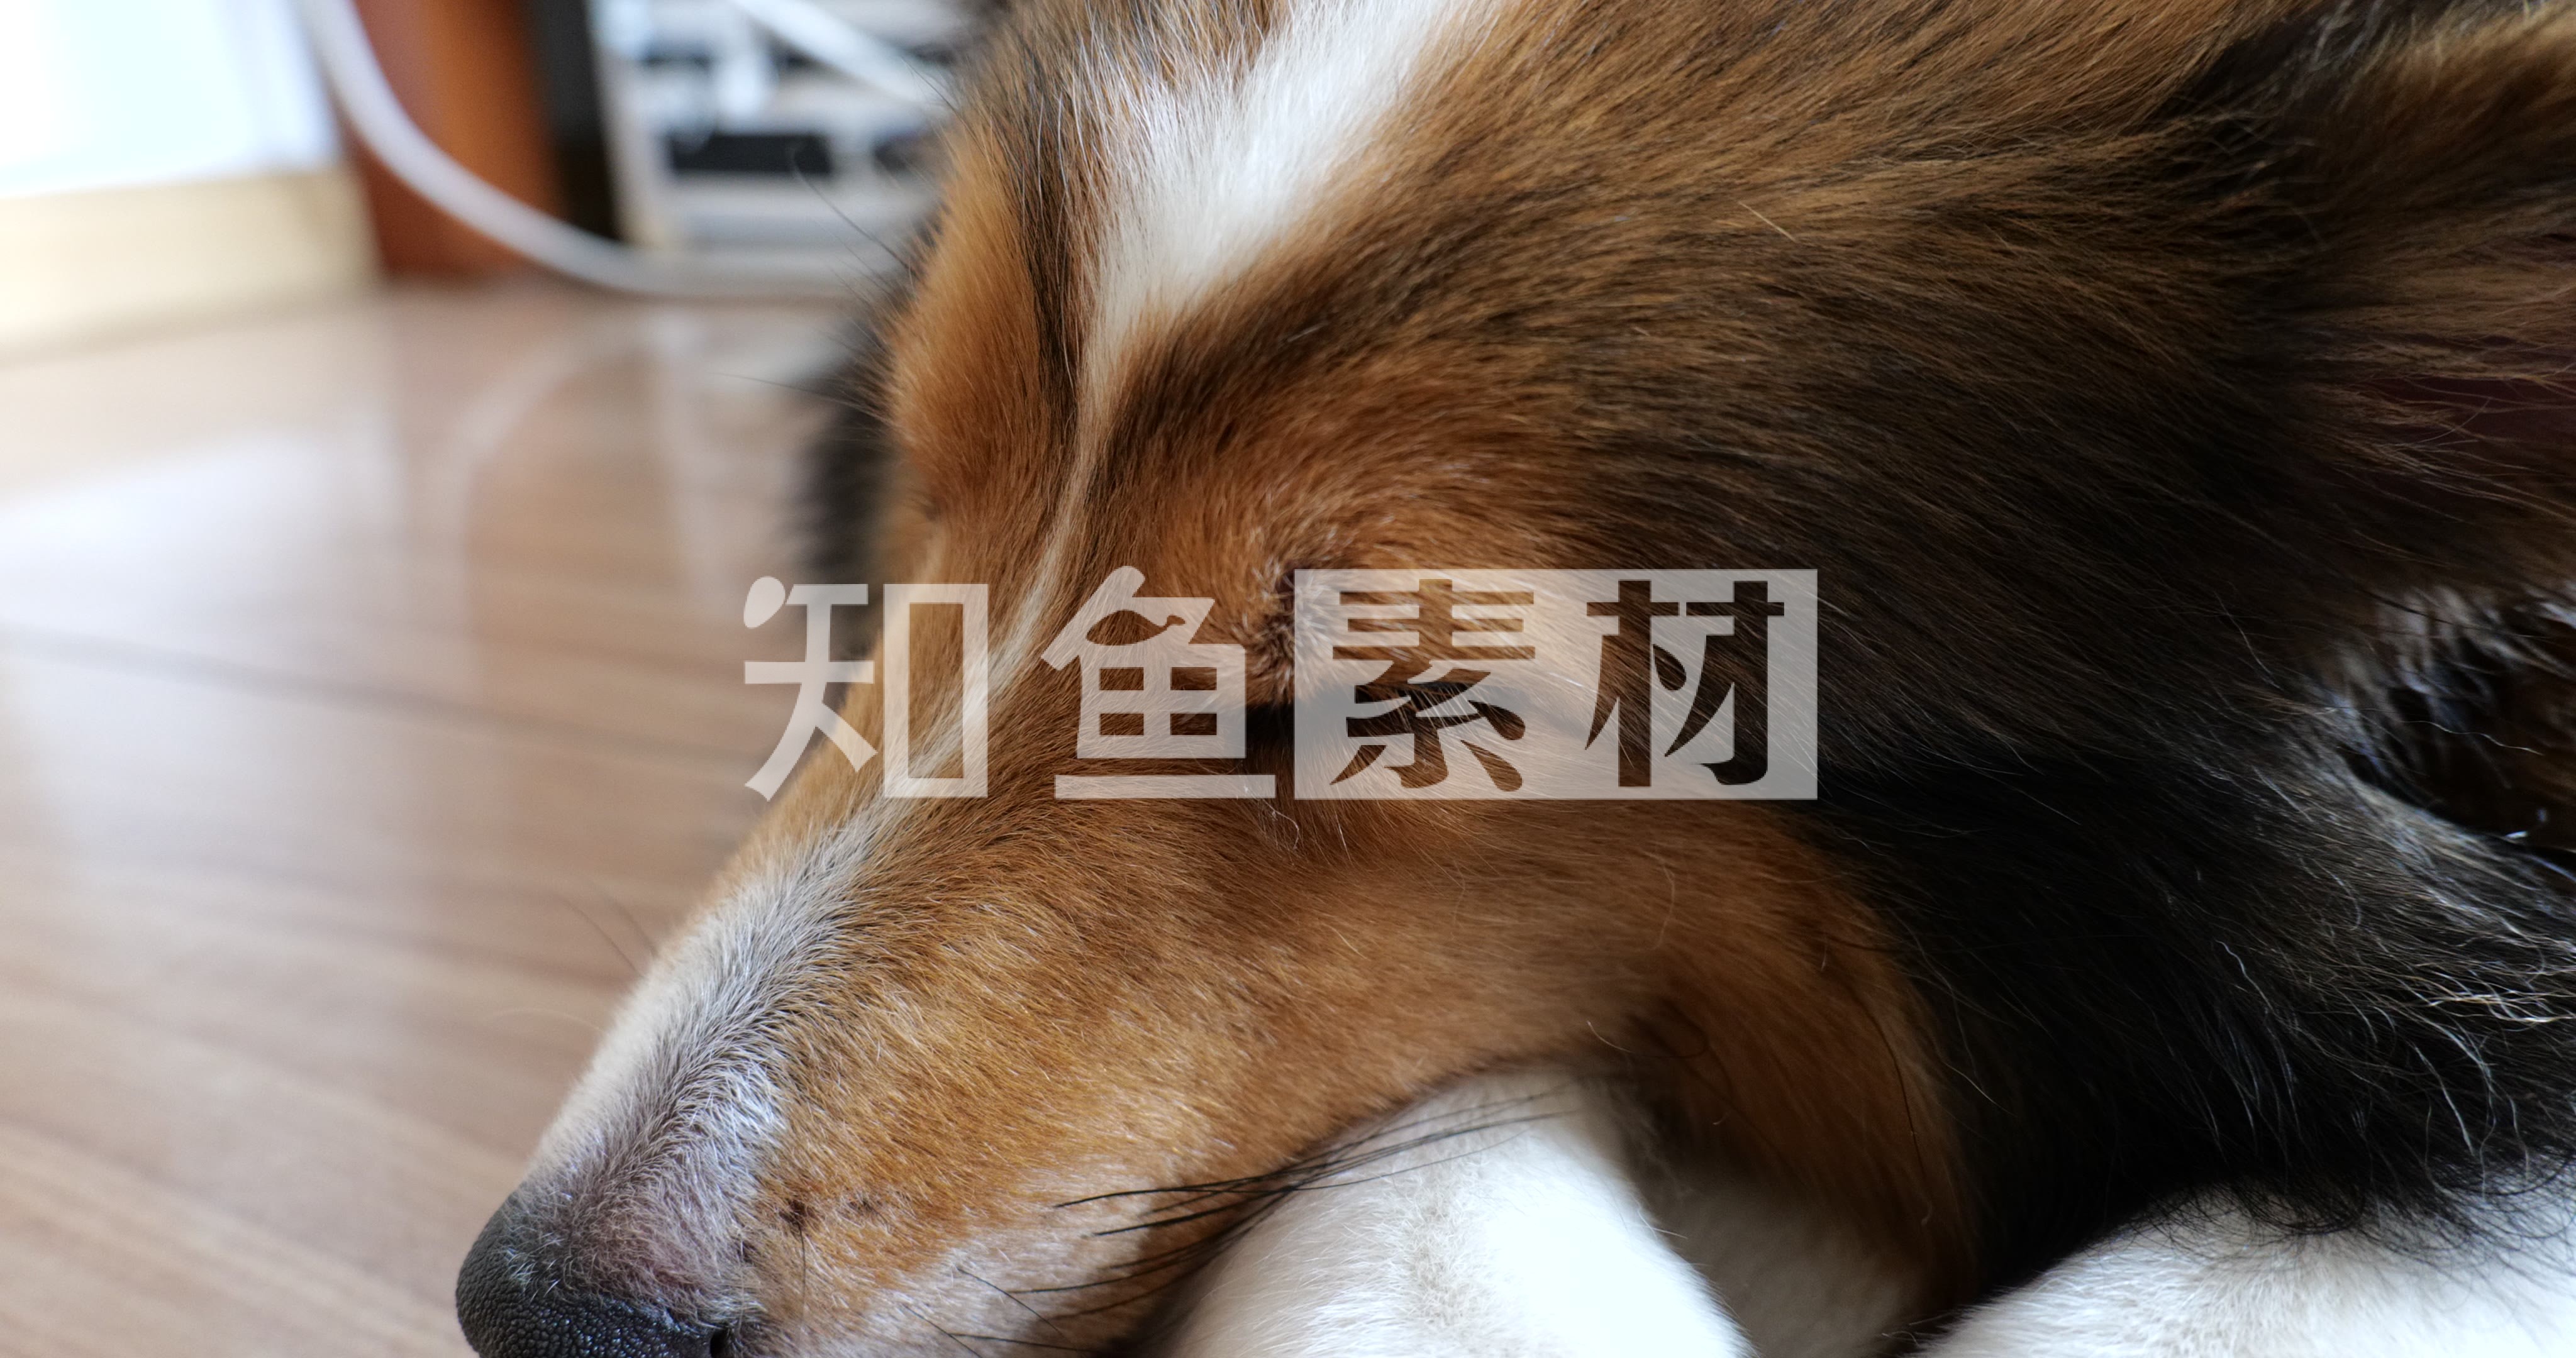 Free Images : puppy, cute, sleeping, peaceful, bulldog, vertebrate, dog ...